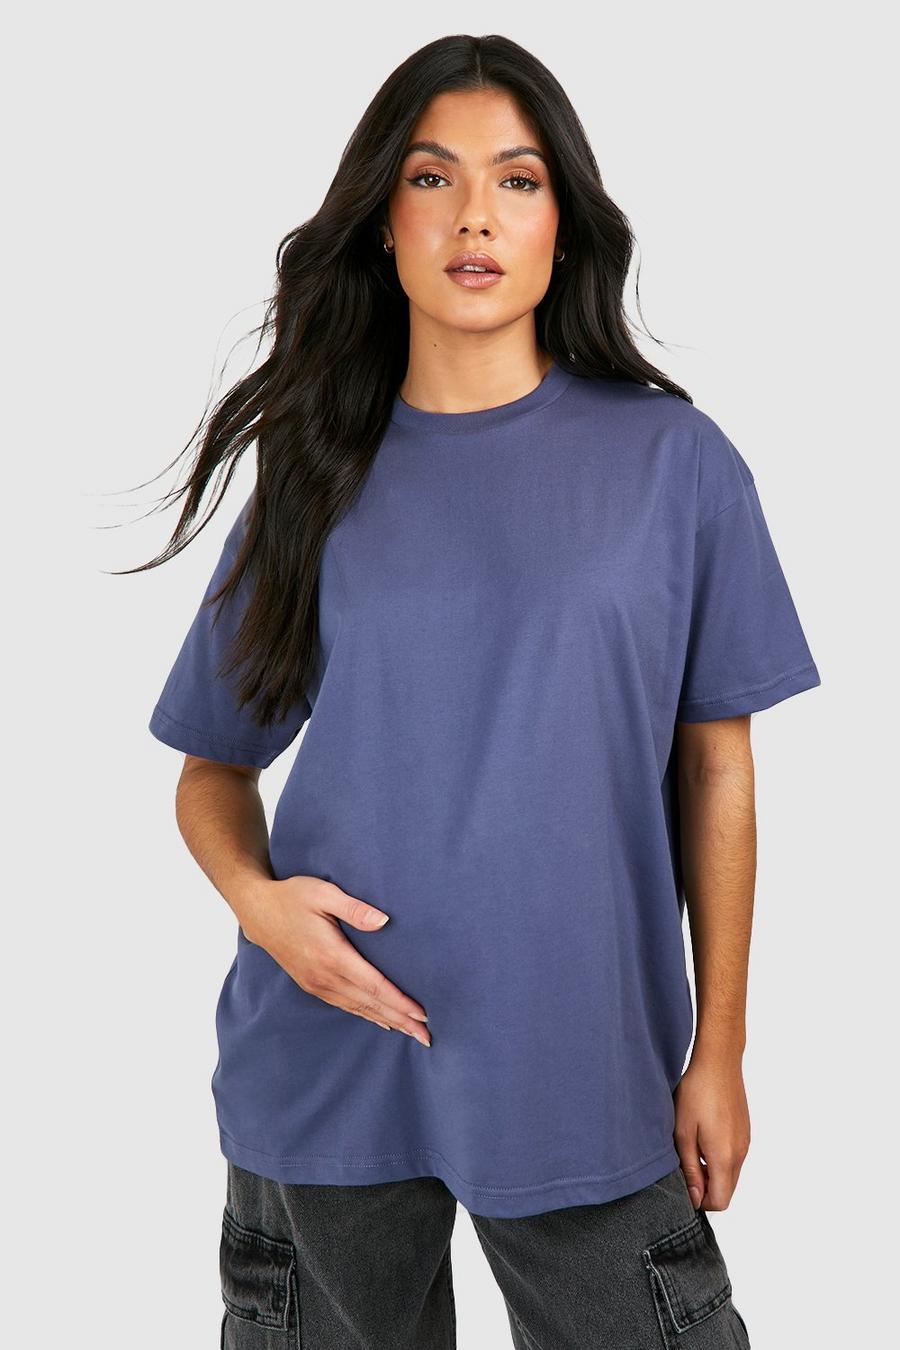 Maternity Tops, Maternity T Shirts, Shirts & Blouses